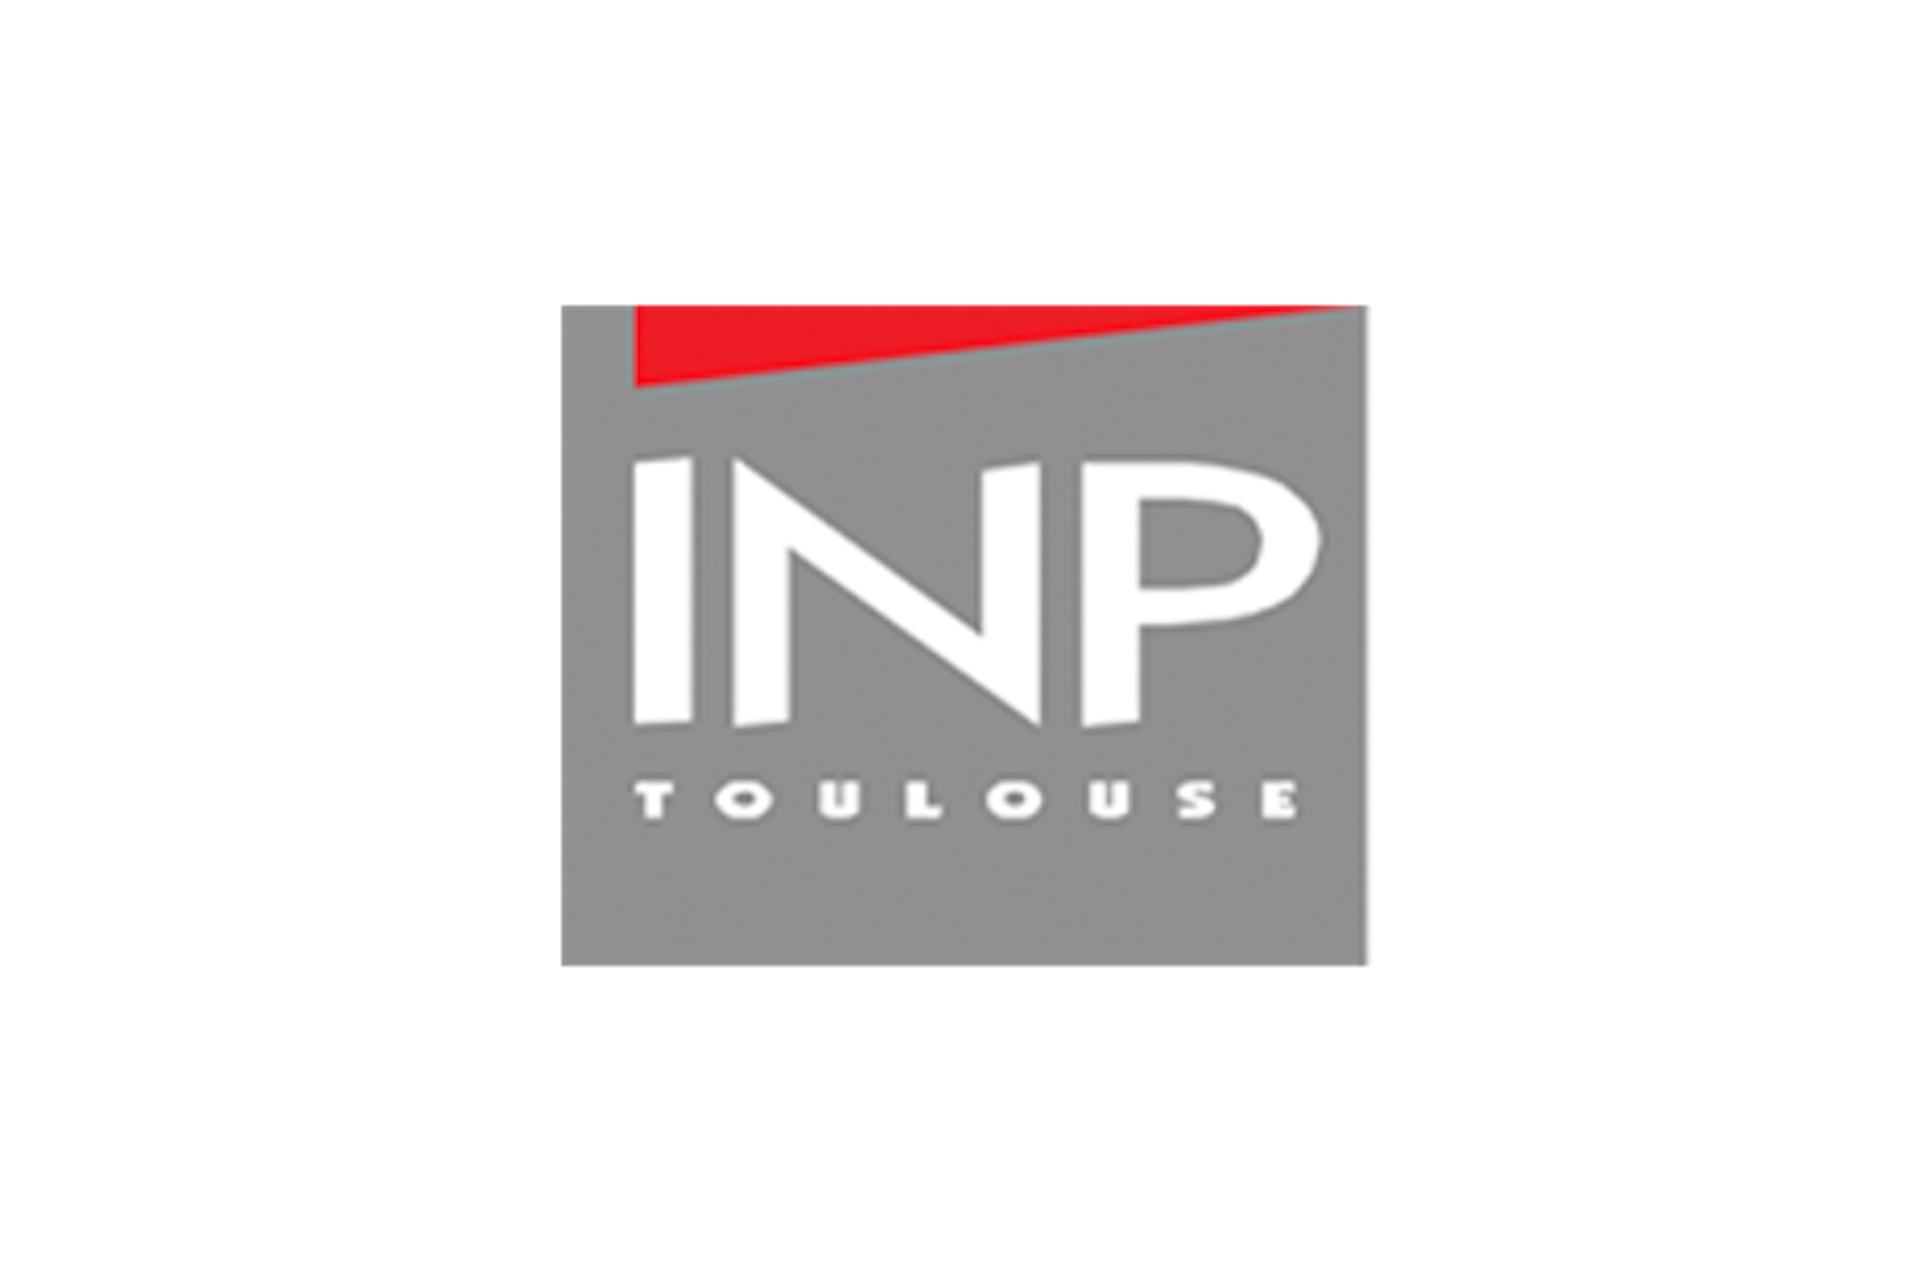 logo INP Toulouse